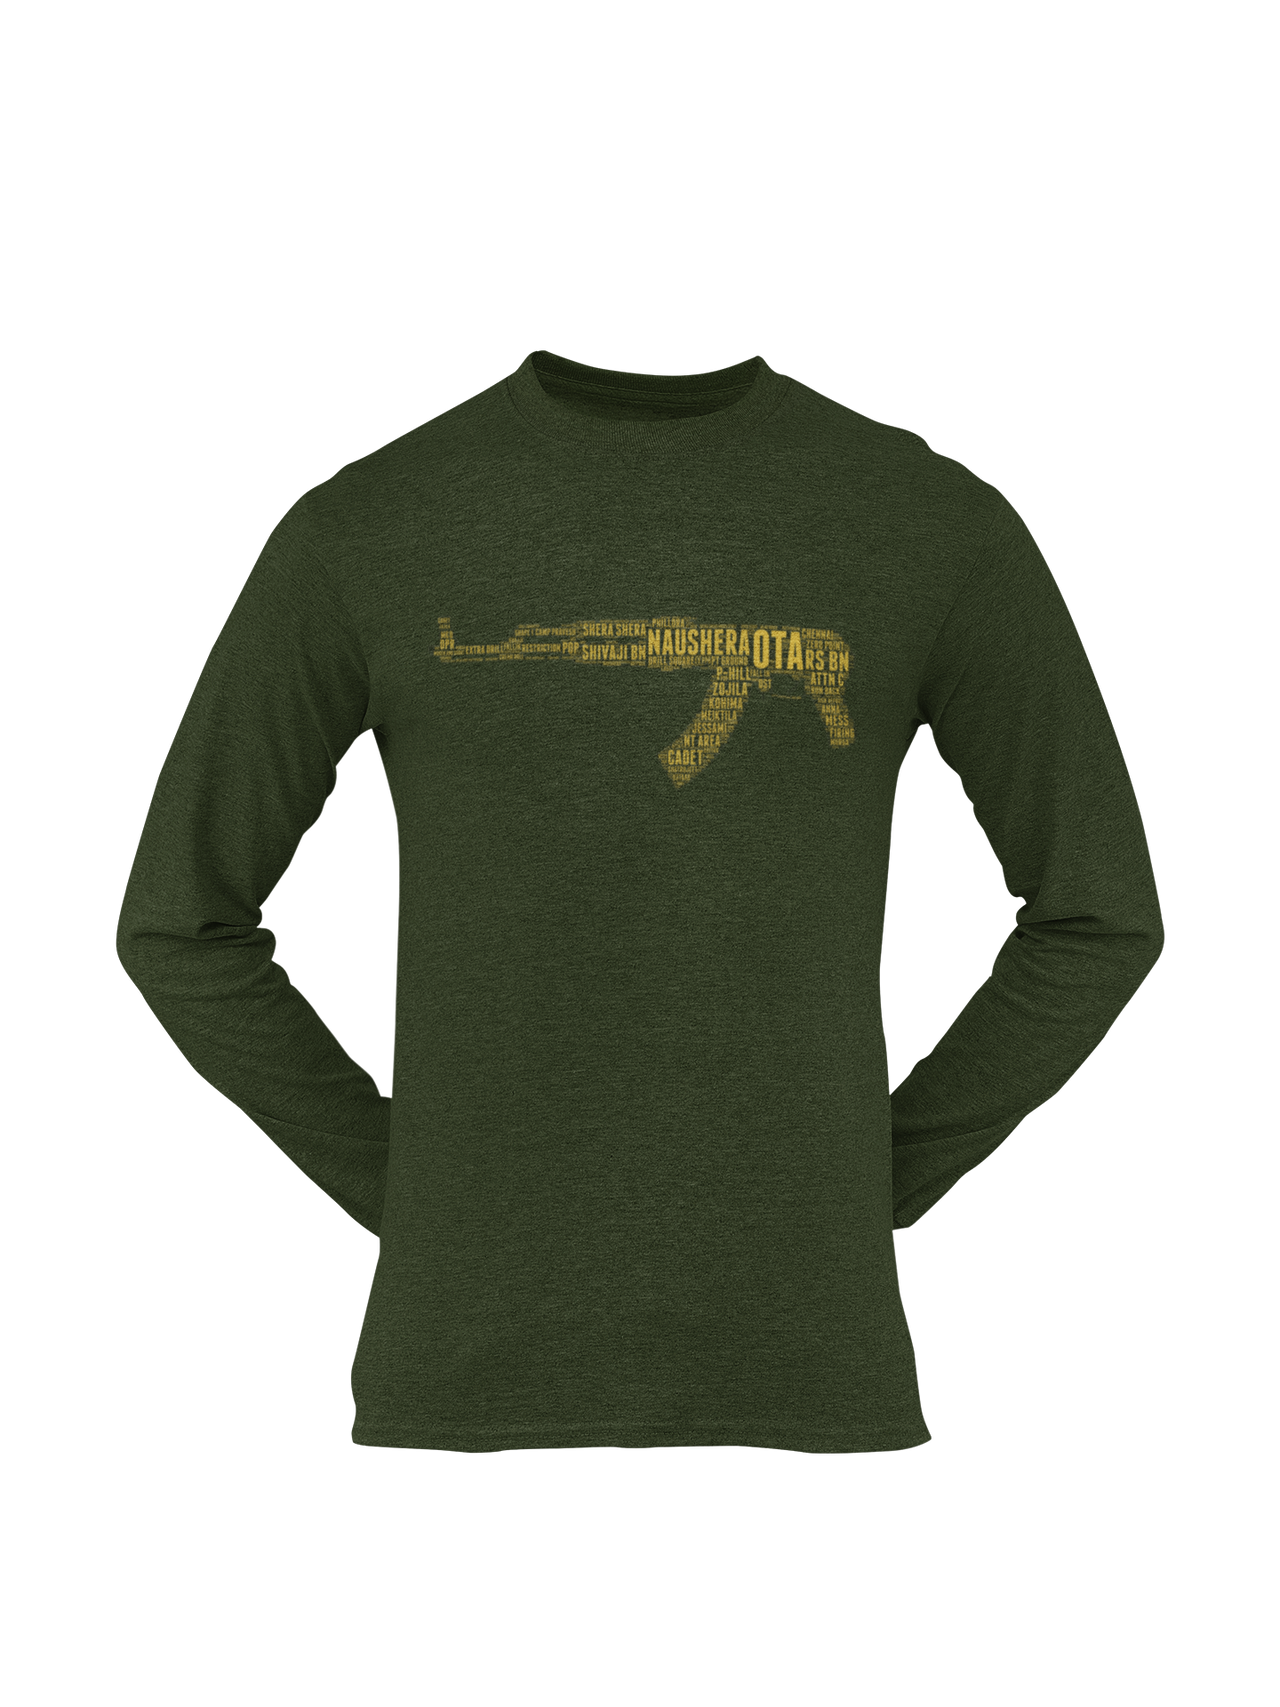 OTA T-shirt - Word Cloud Naushera - AK-47 Folding Stock (Men)